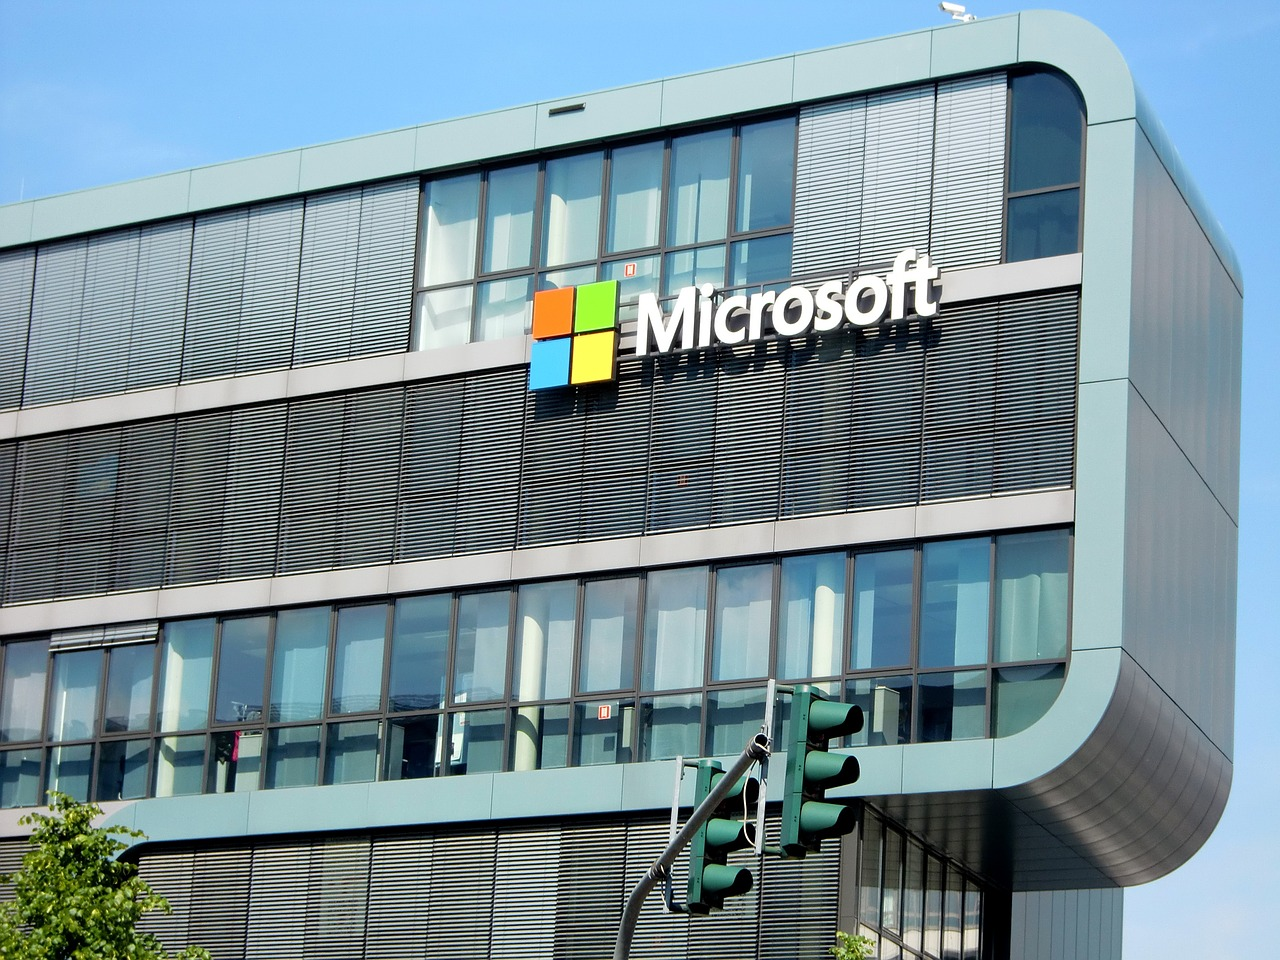 Microsoft building against a blue sky